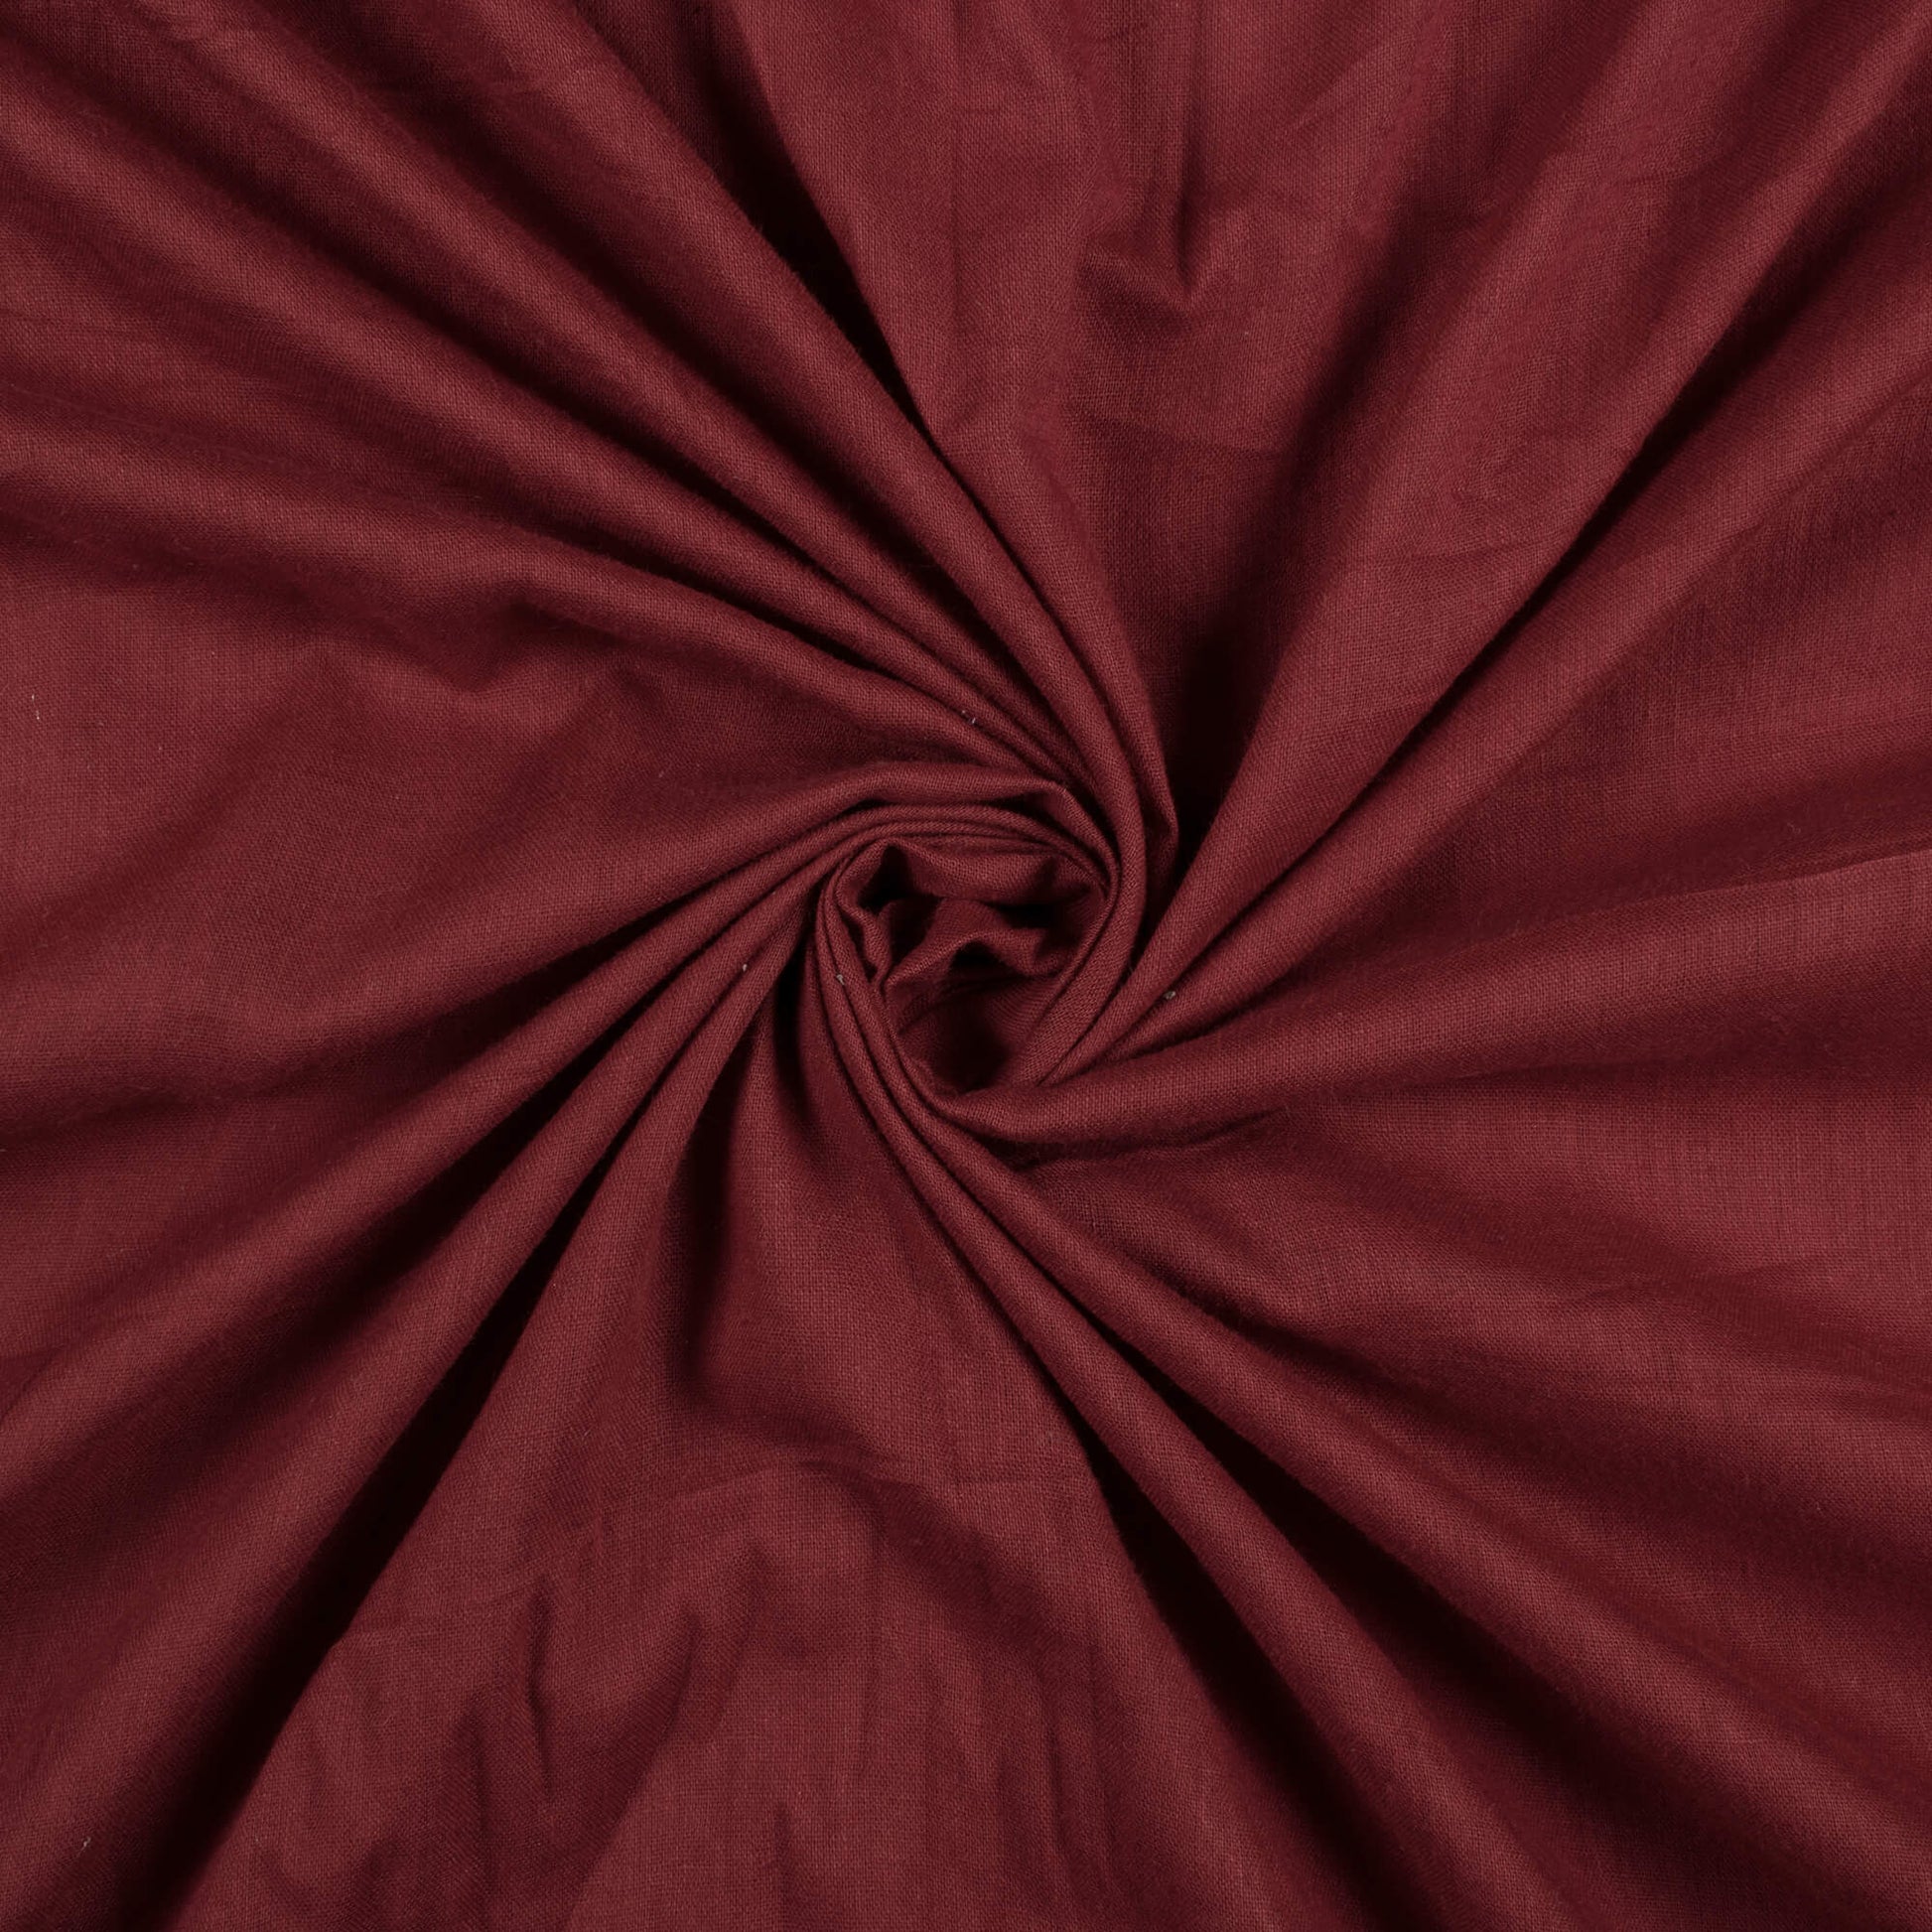 Dark Red Cambric Image of ATIPL fabrics and textiles.